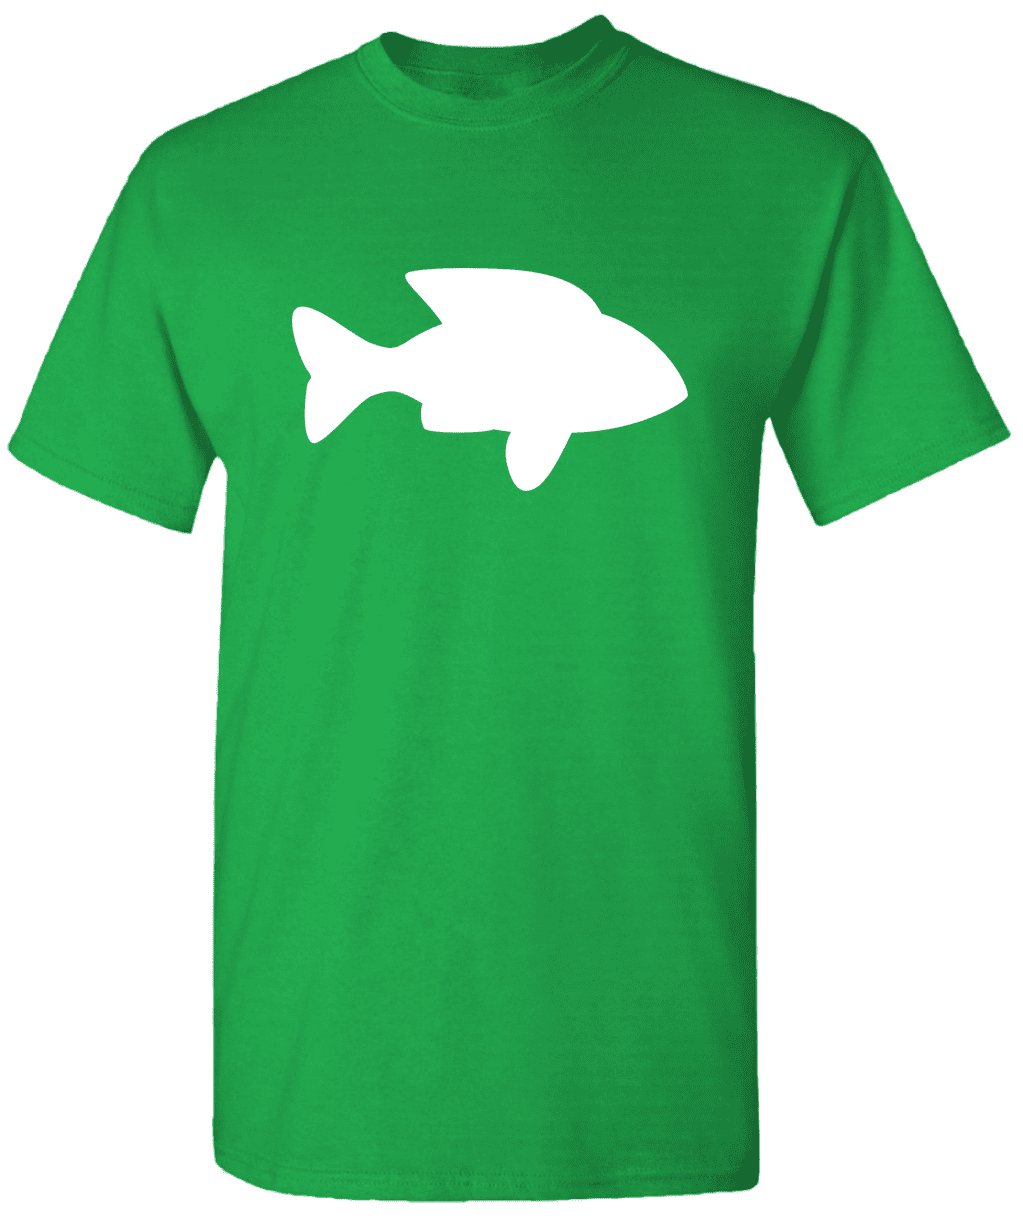 Funny Fishing Shirt Designs Fishing T-Shirts Bass Fishing Shirts 